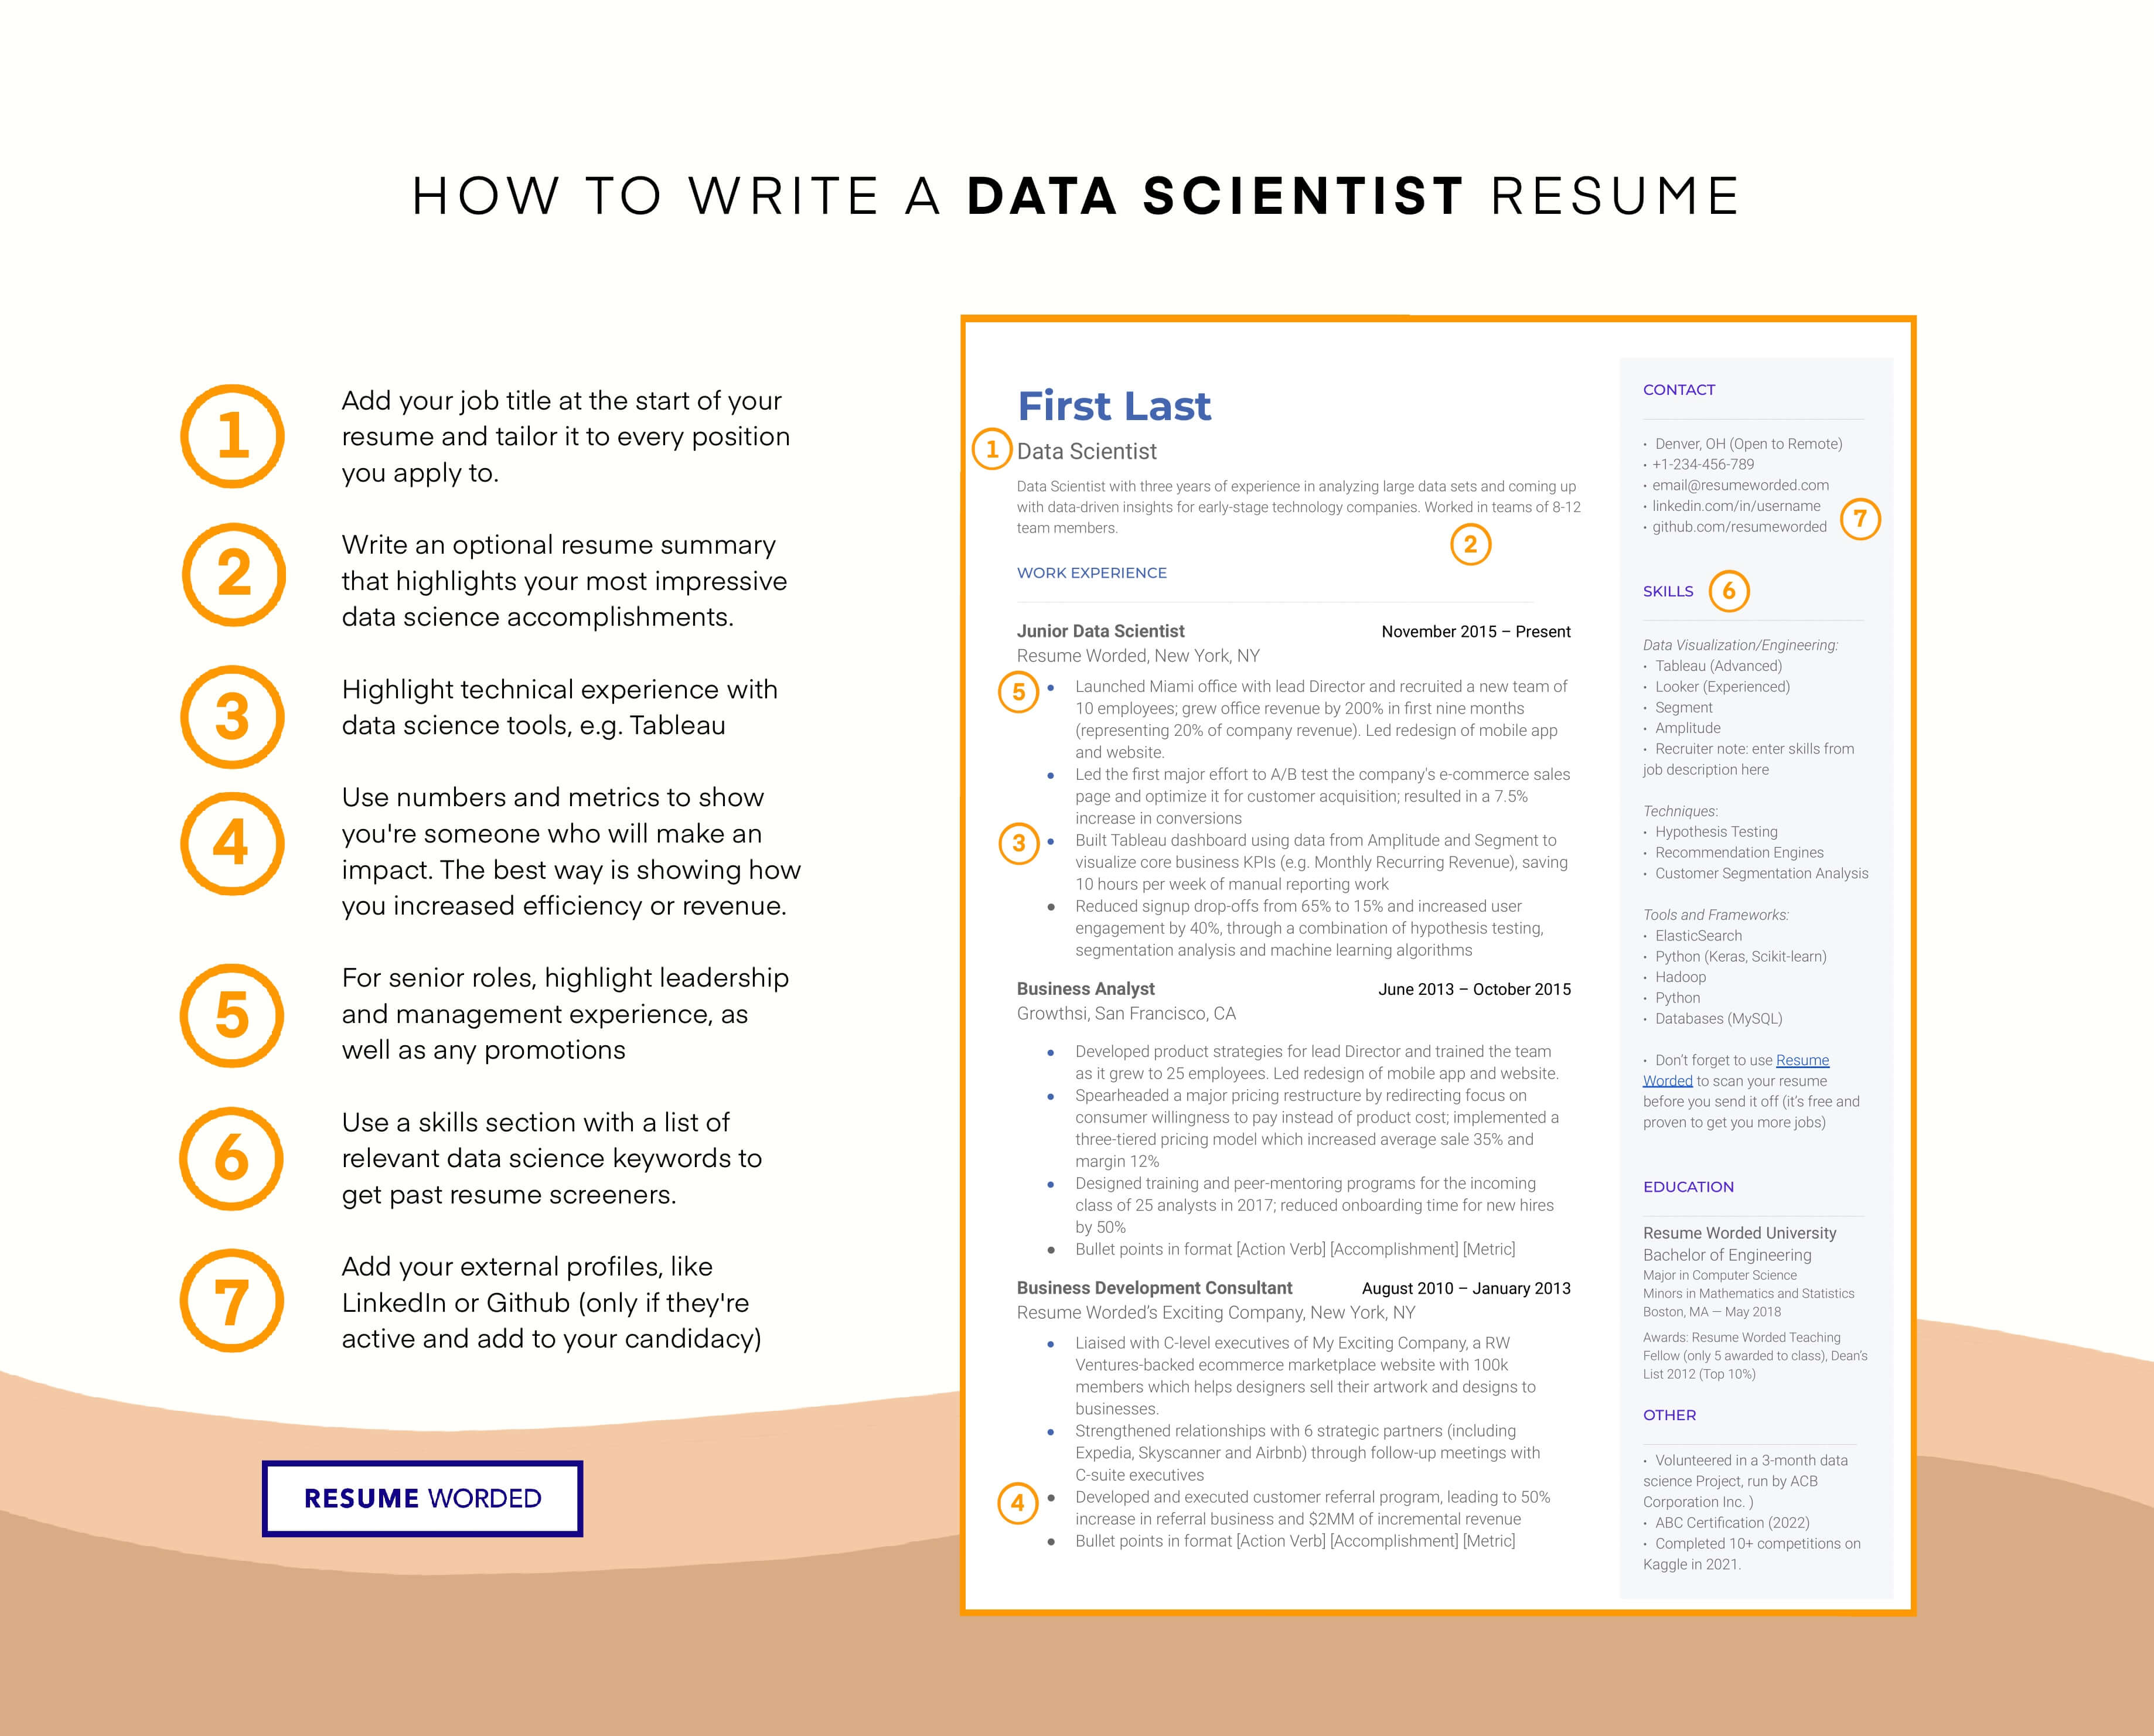 Numbers and metrics relevant to data scientists, and good use of skills relevant to data scientists. - Junior Data Scientist Resume